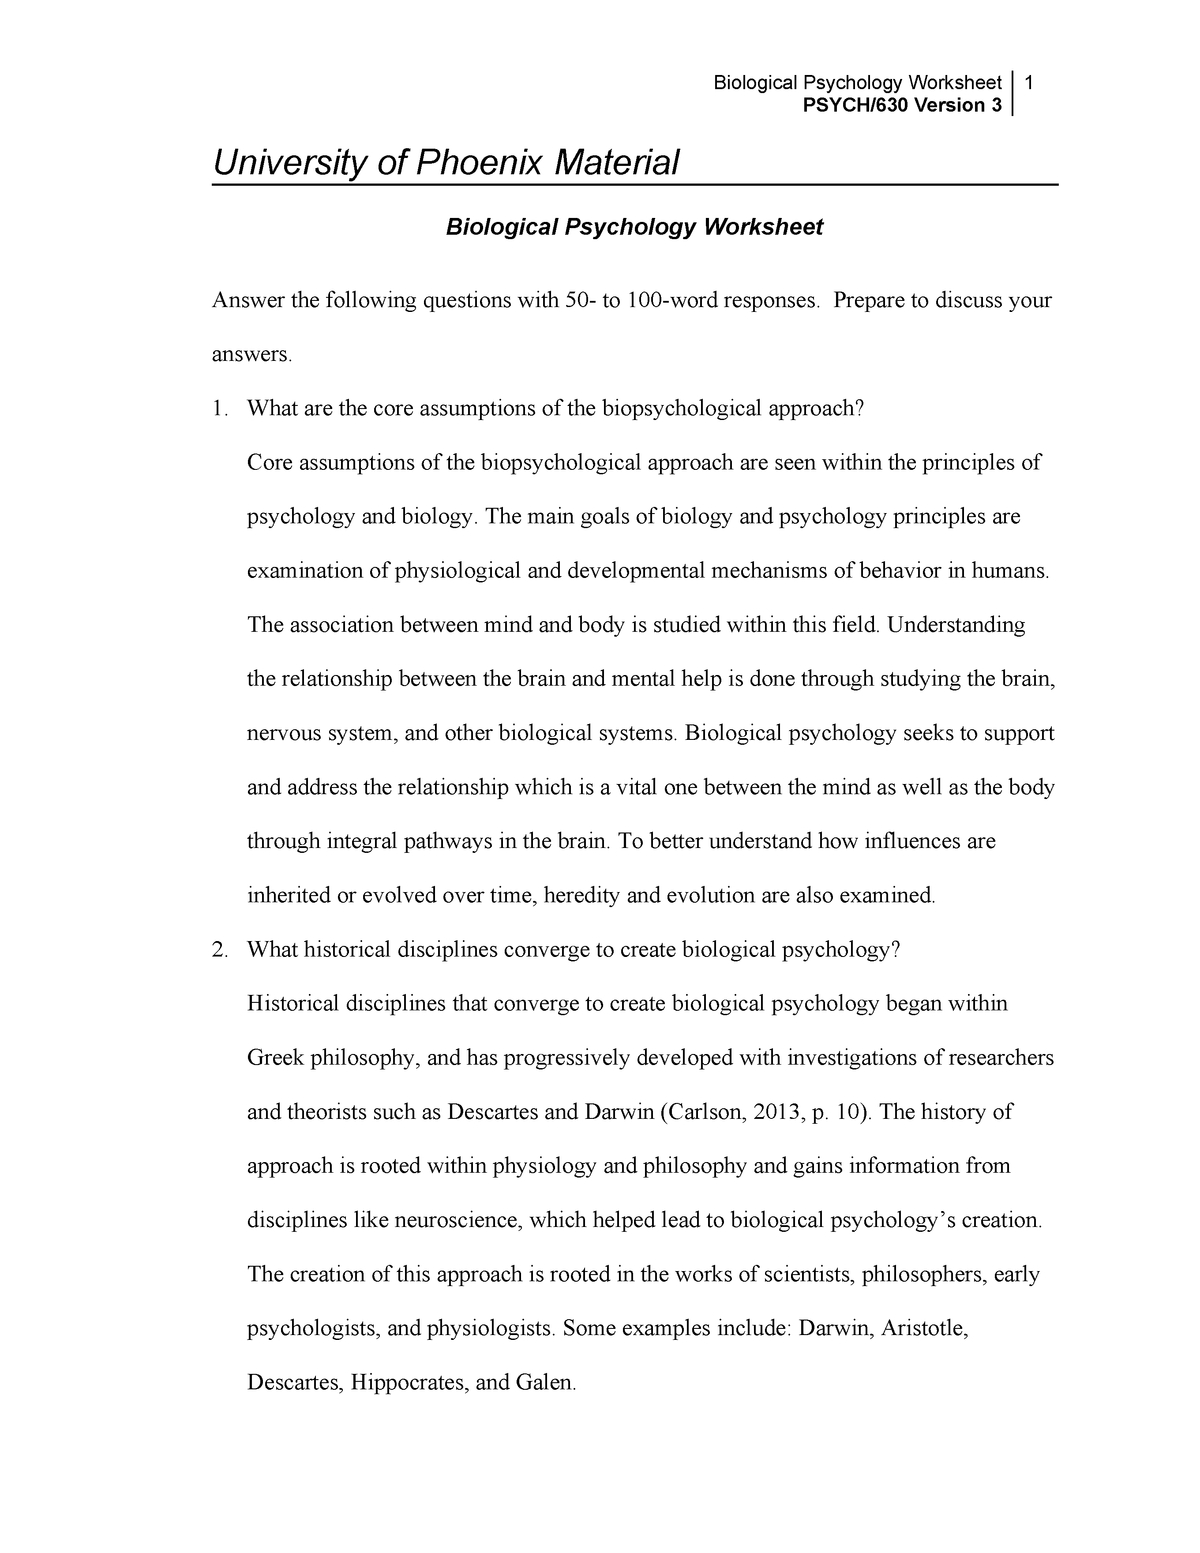 Neurological Psychology Worksheet  Psych 630  Uopx  Studocu